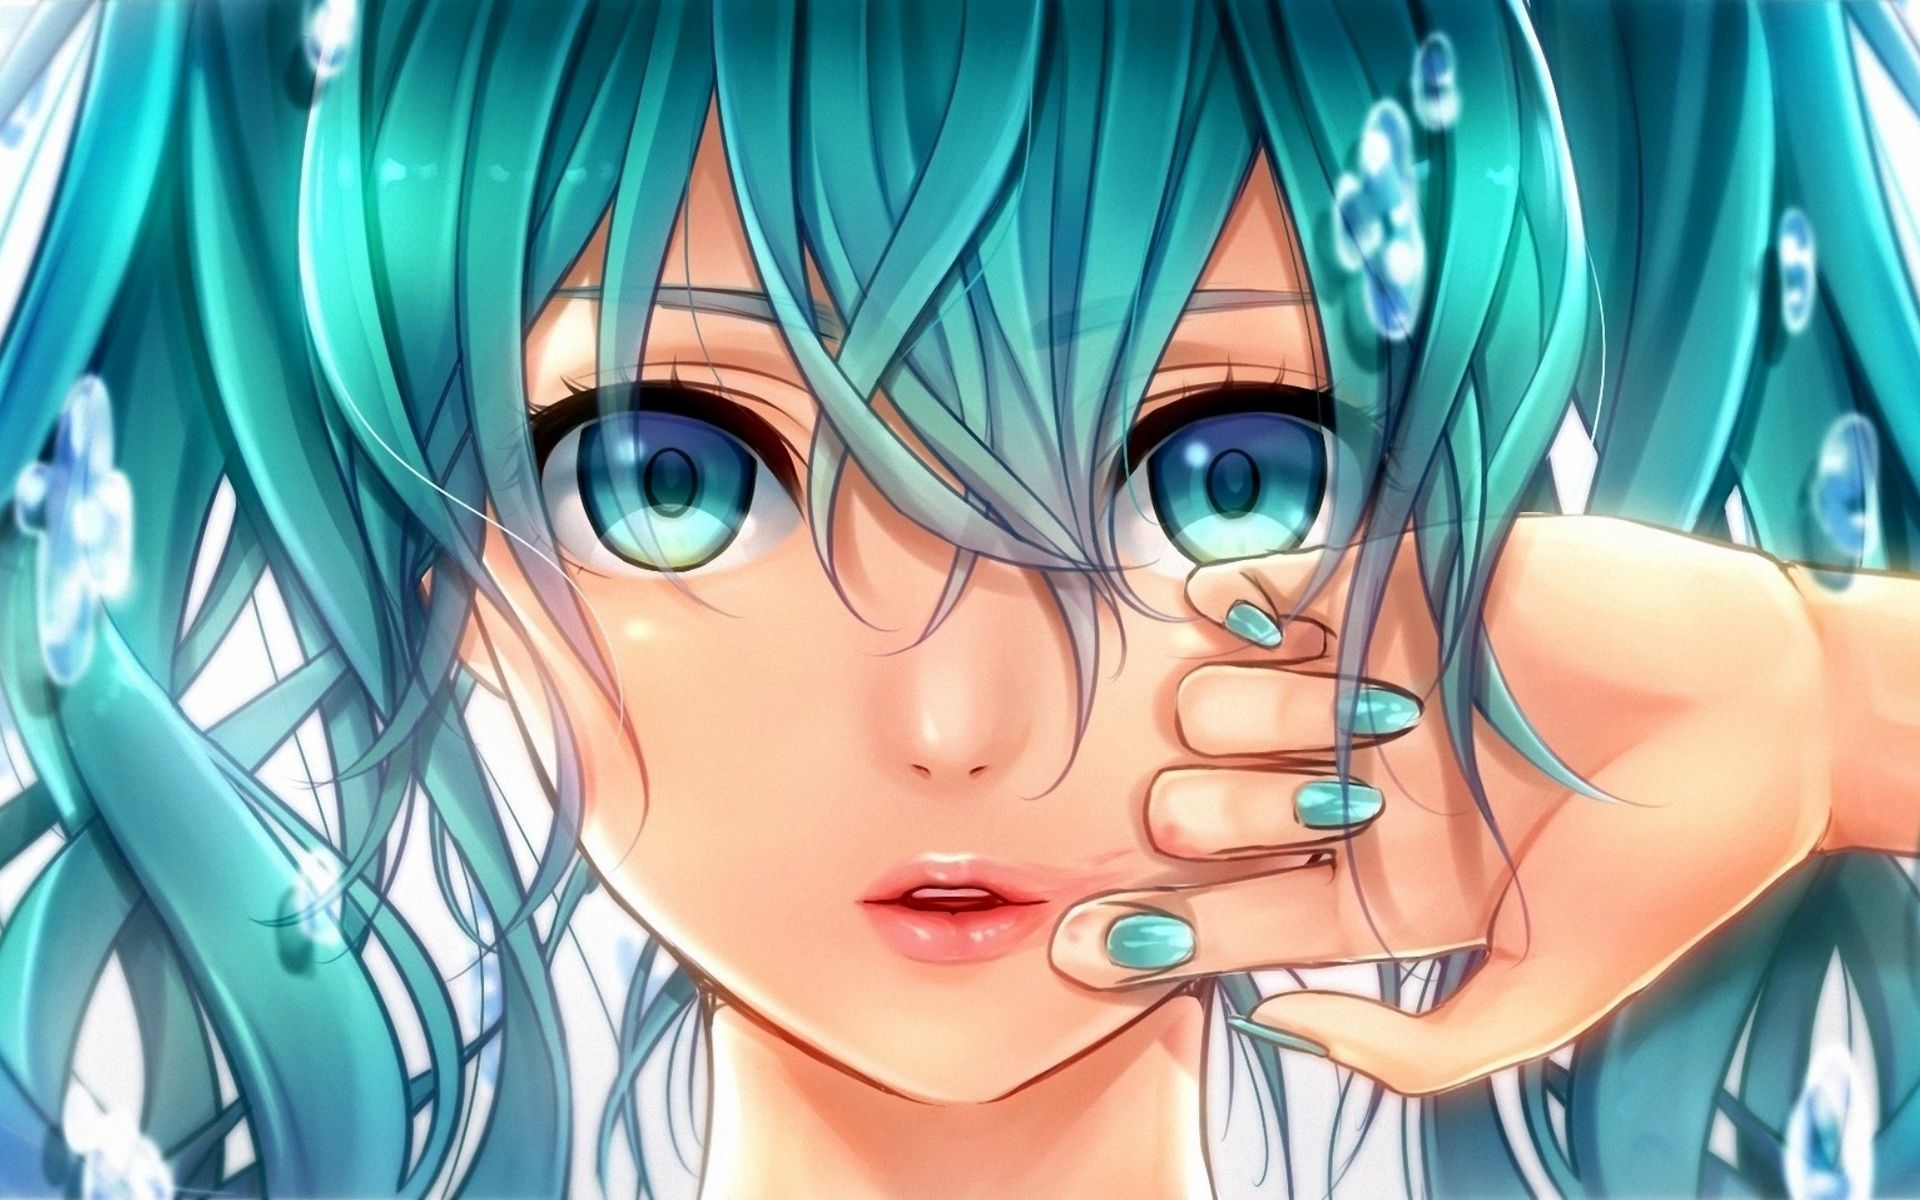 6. "Light Blue Hair and Purple Eyes Anime Art" - wide 9